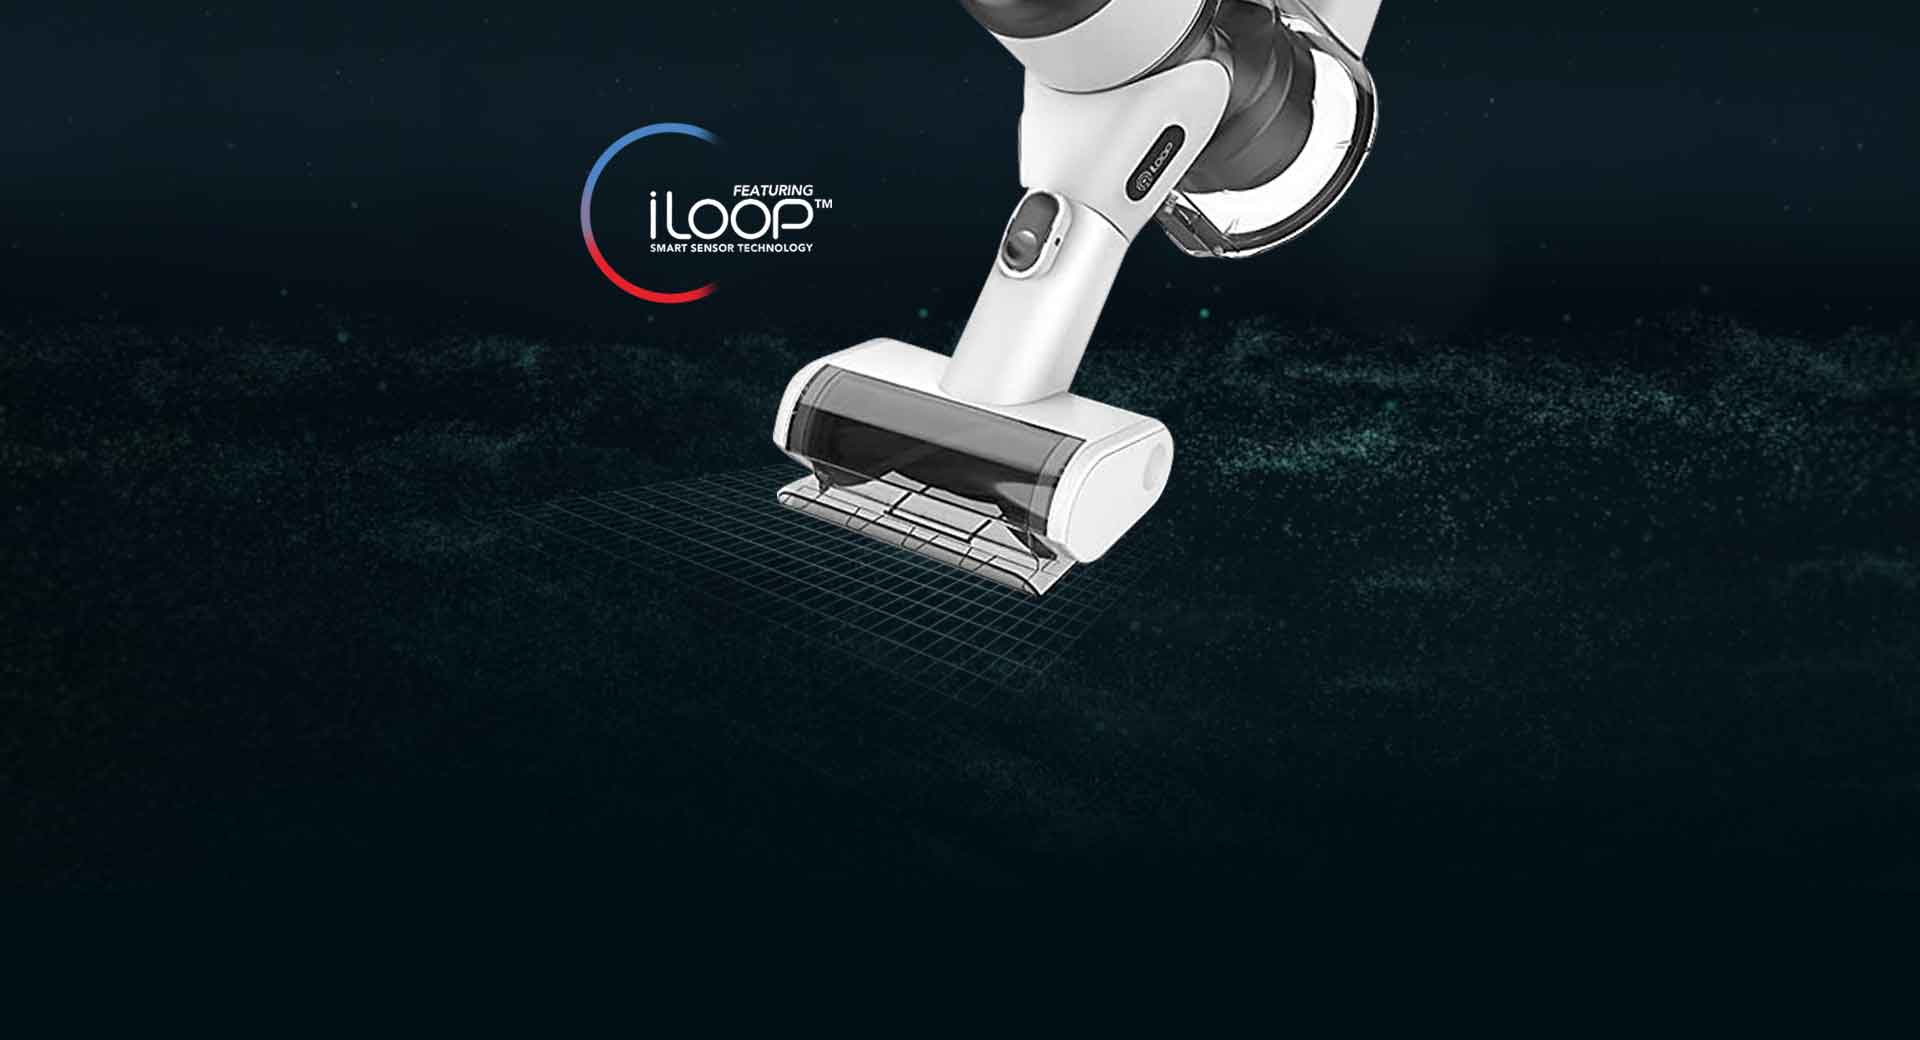 self-adjusting suction power with the iloop™ smart dust sensor